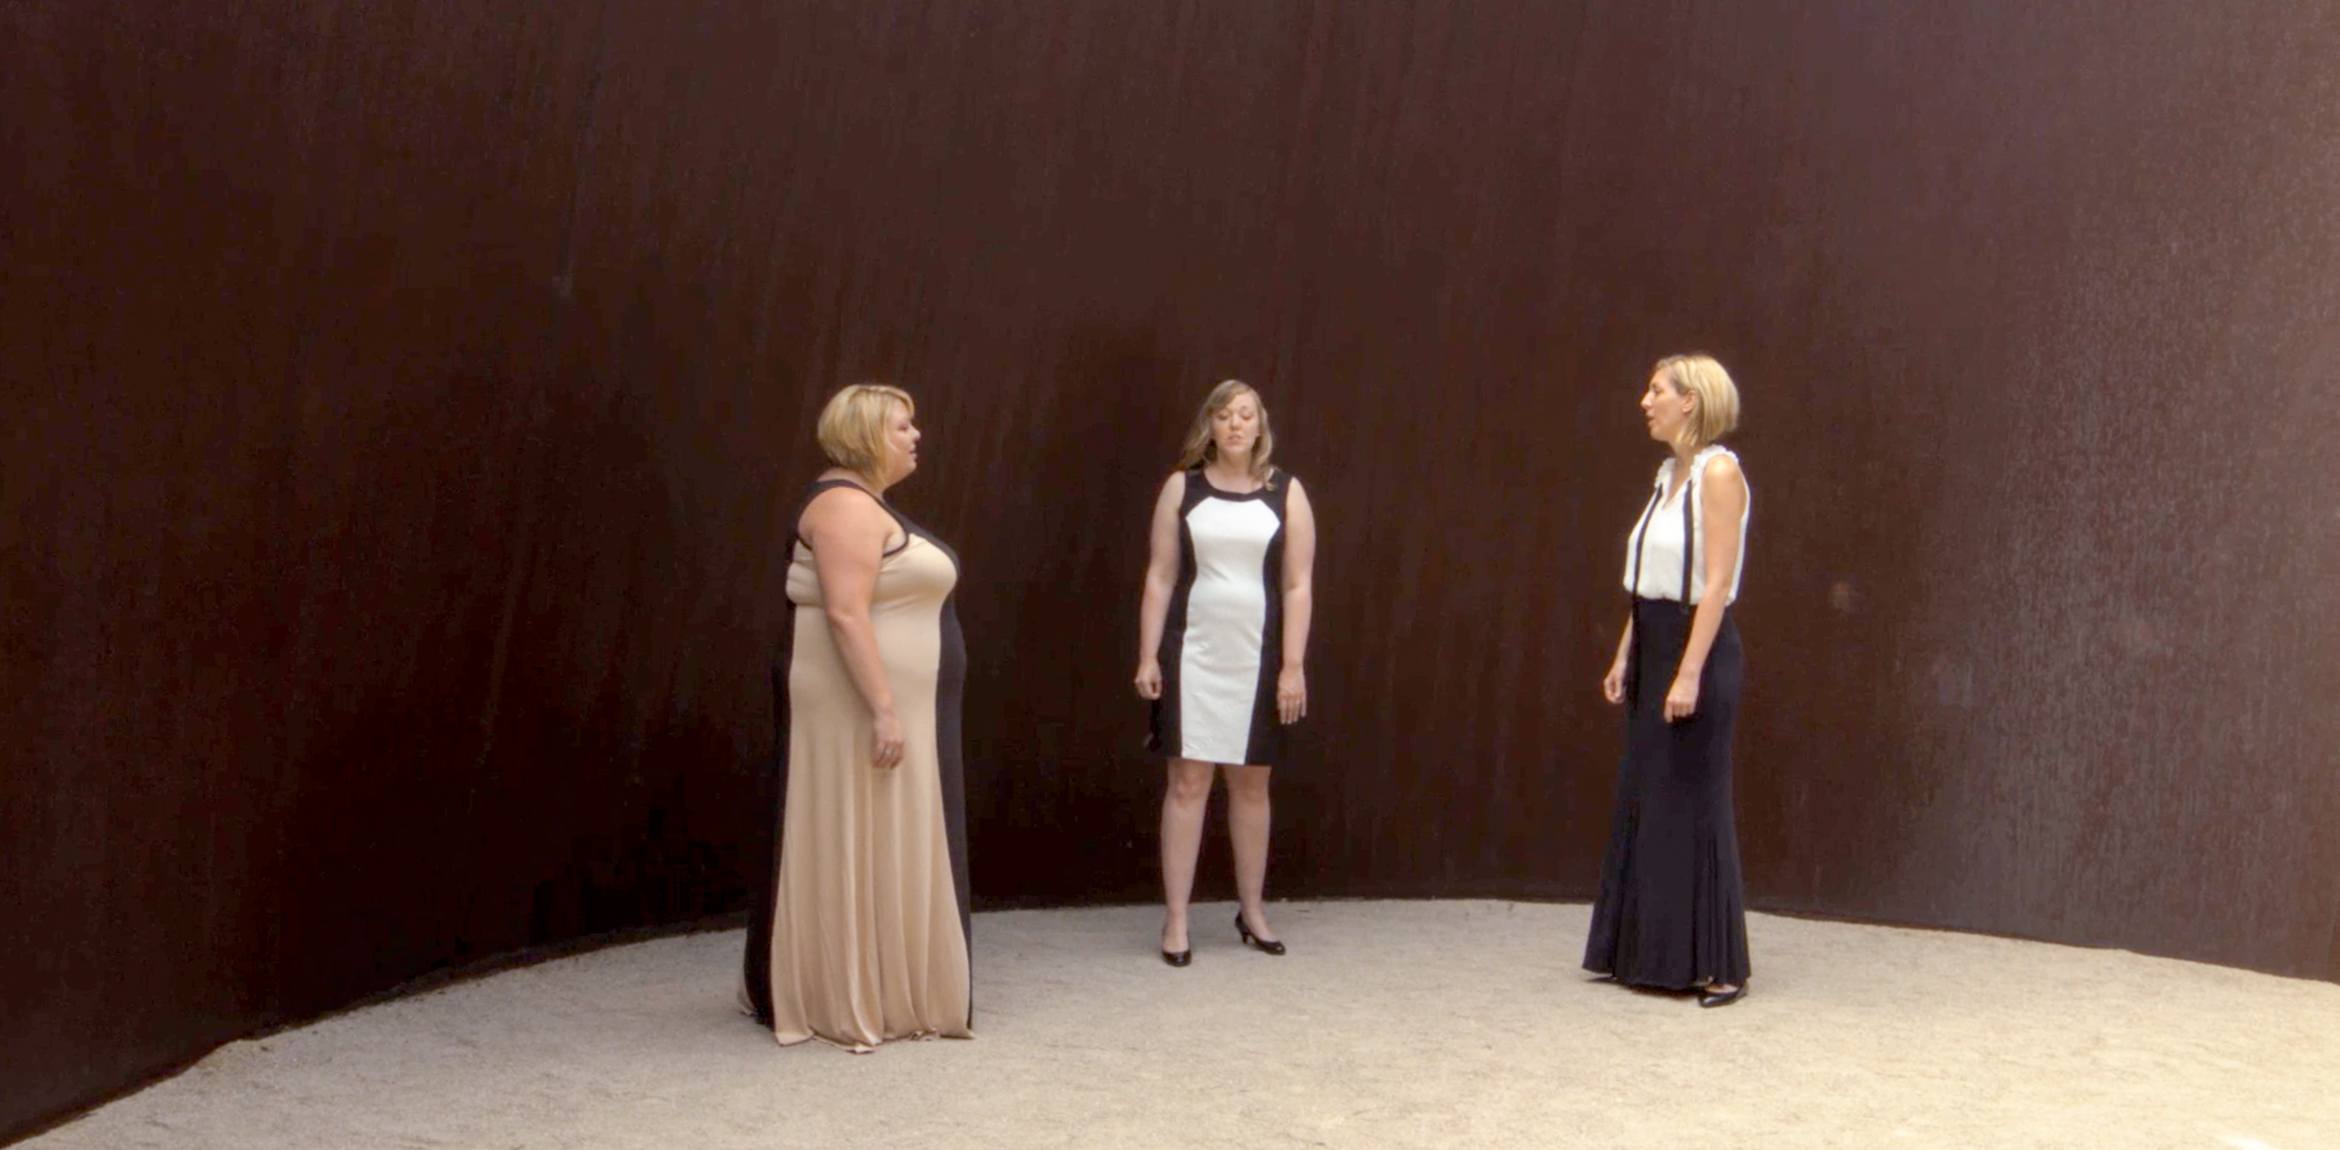 Three singers sing together in Richard Serra's 